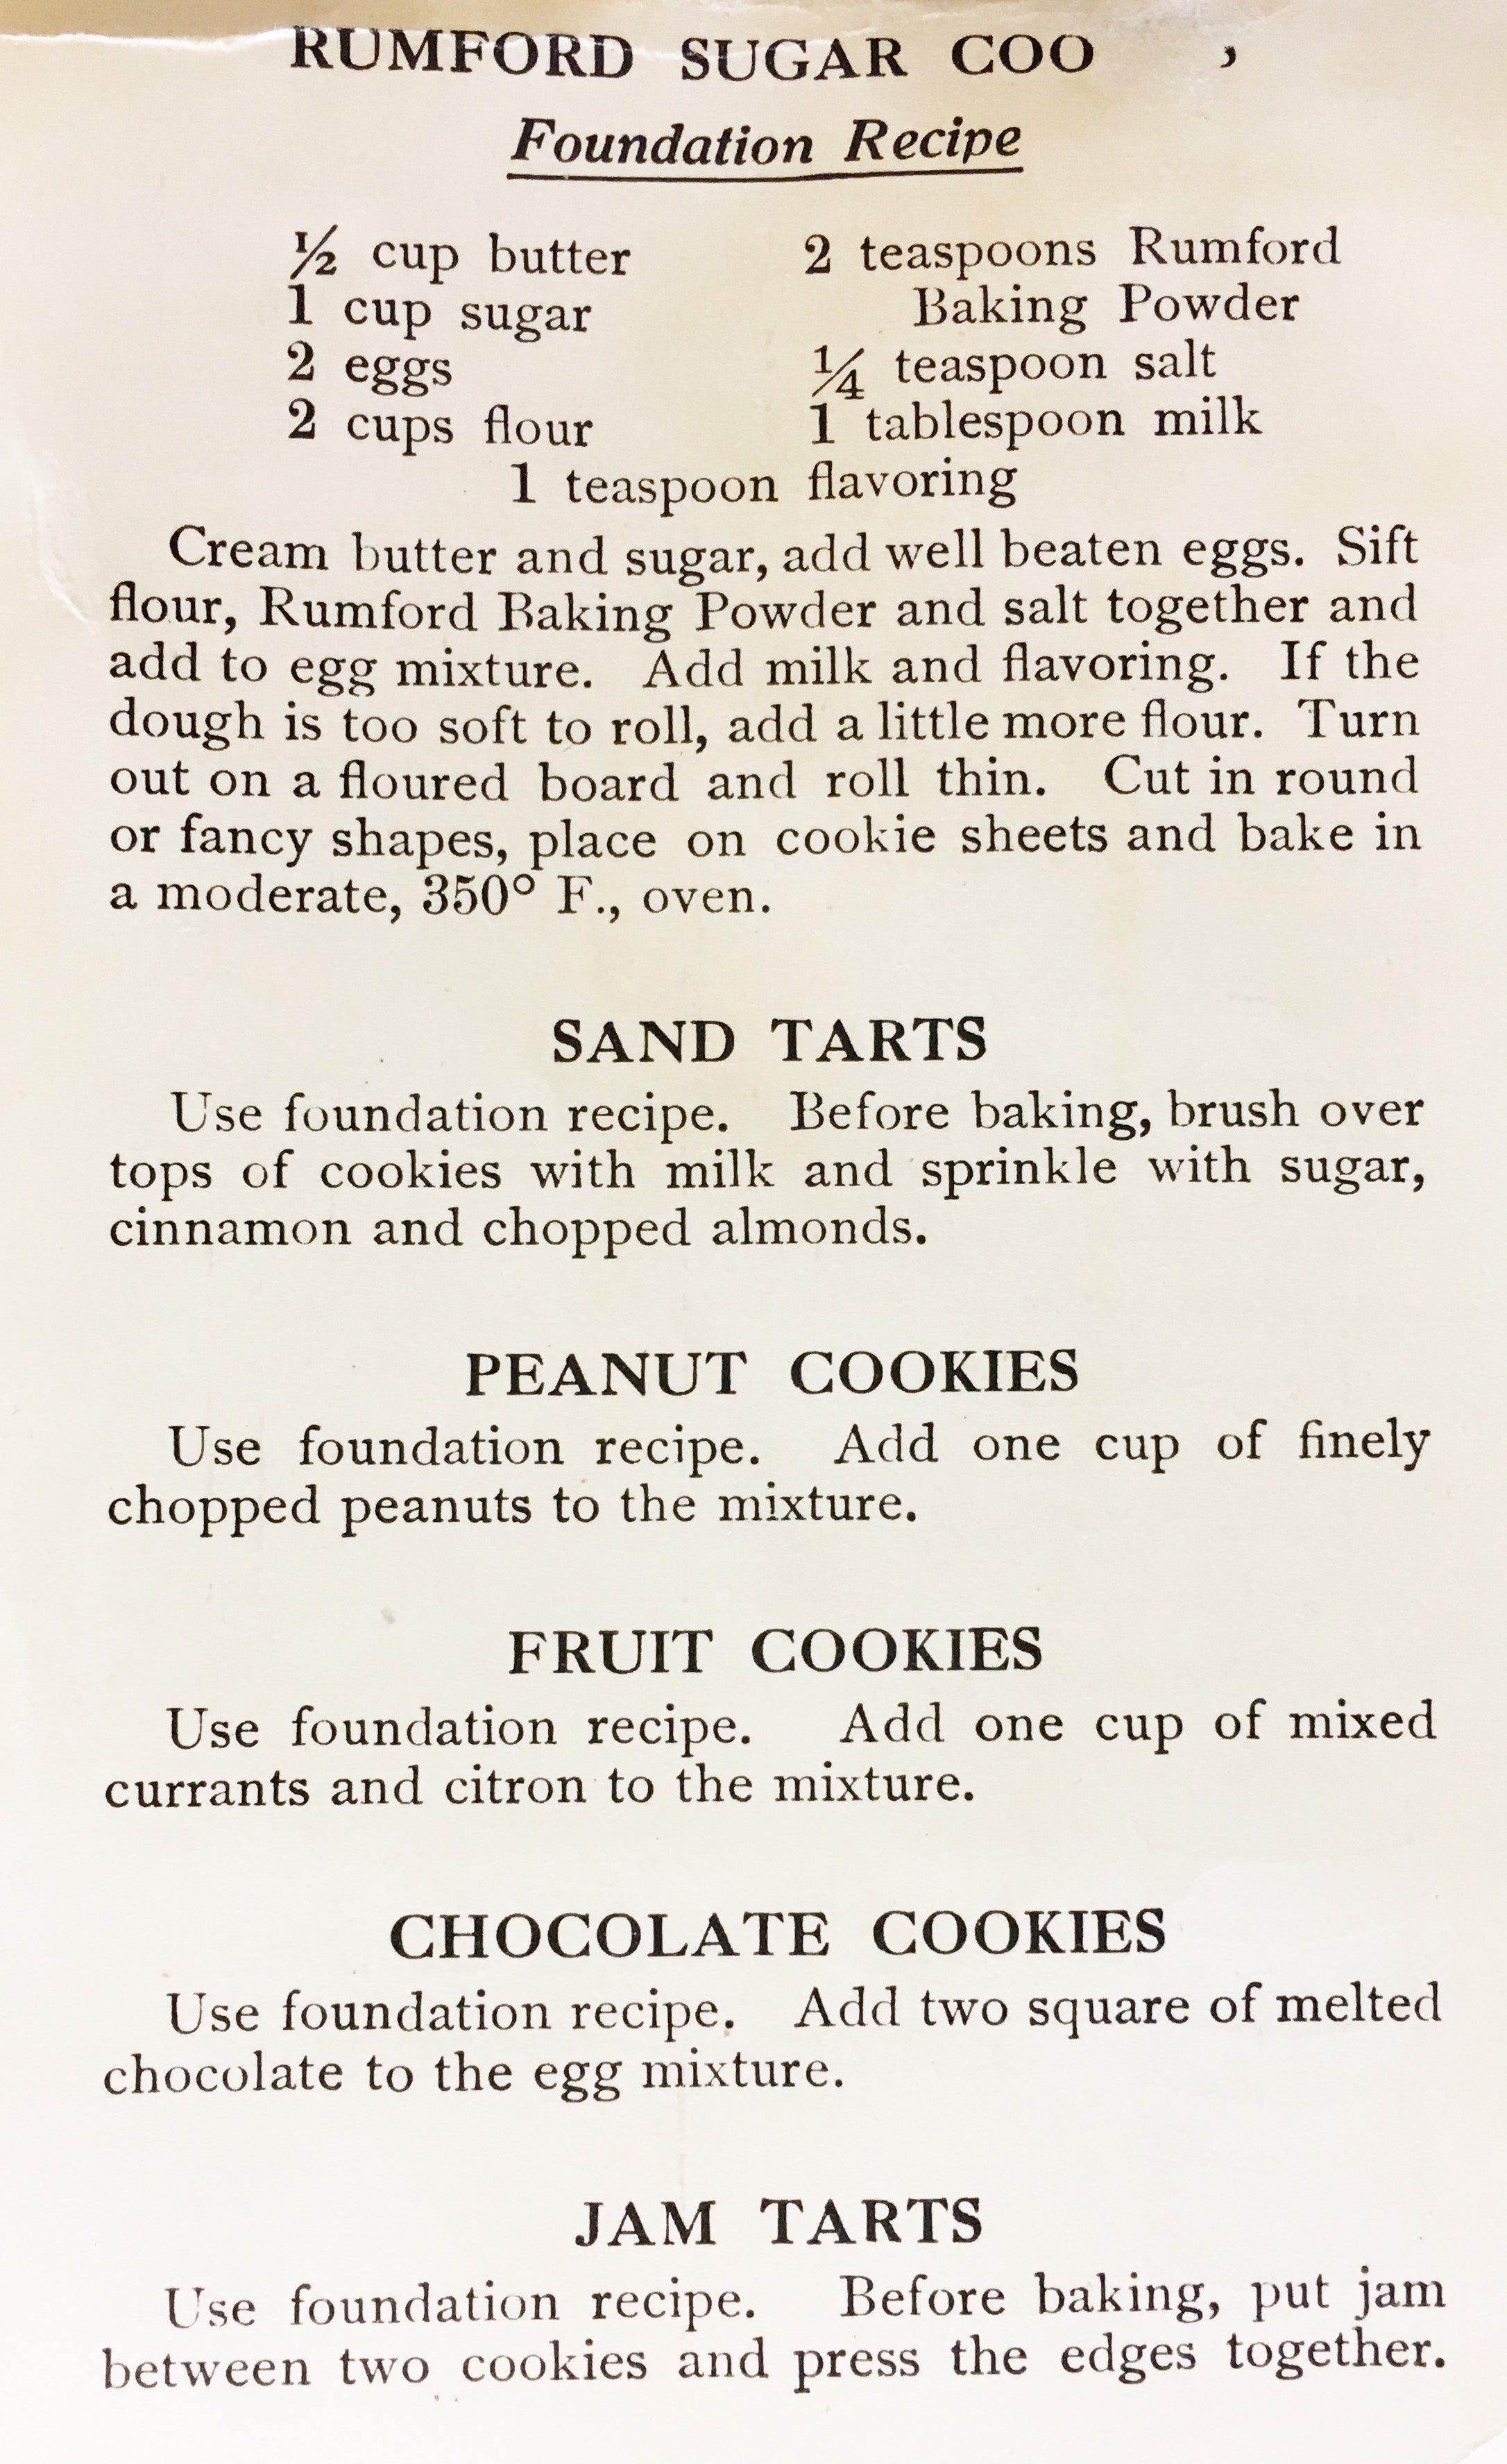 The Rumford Cookie, circa 1936